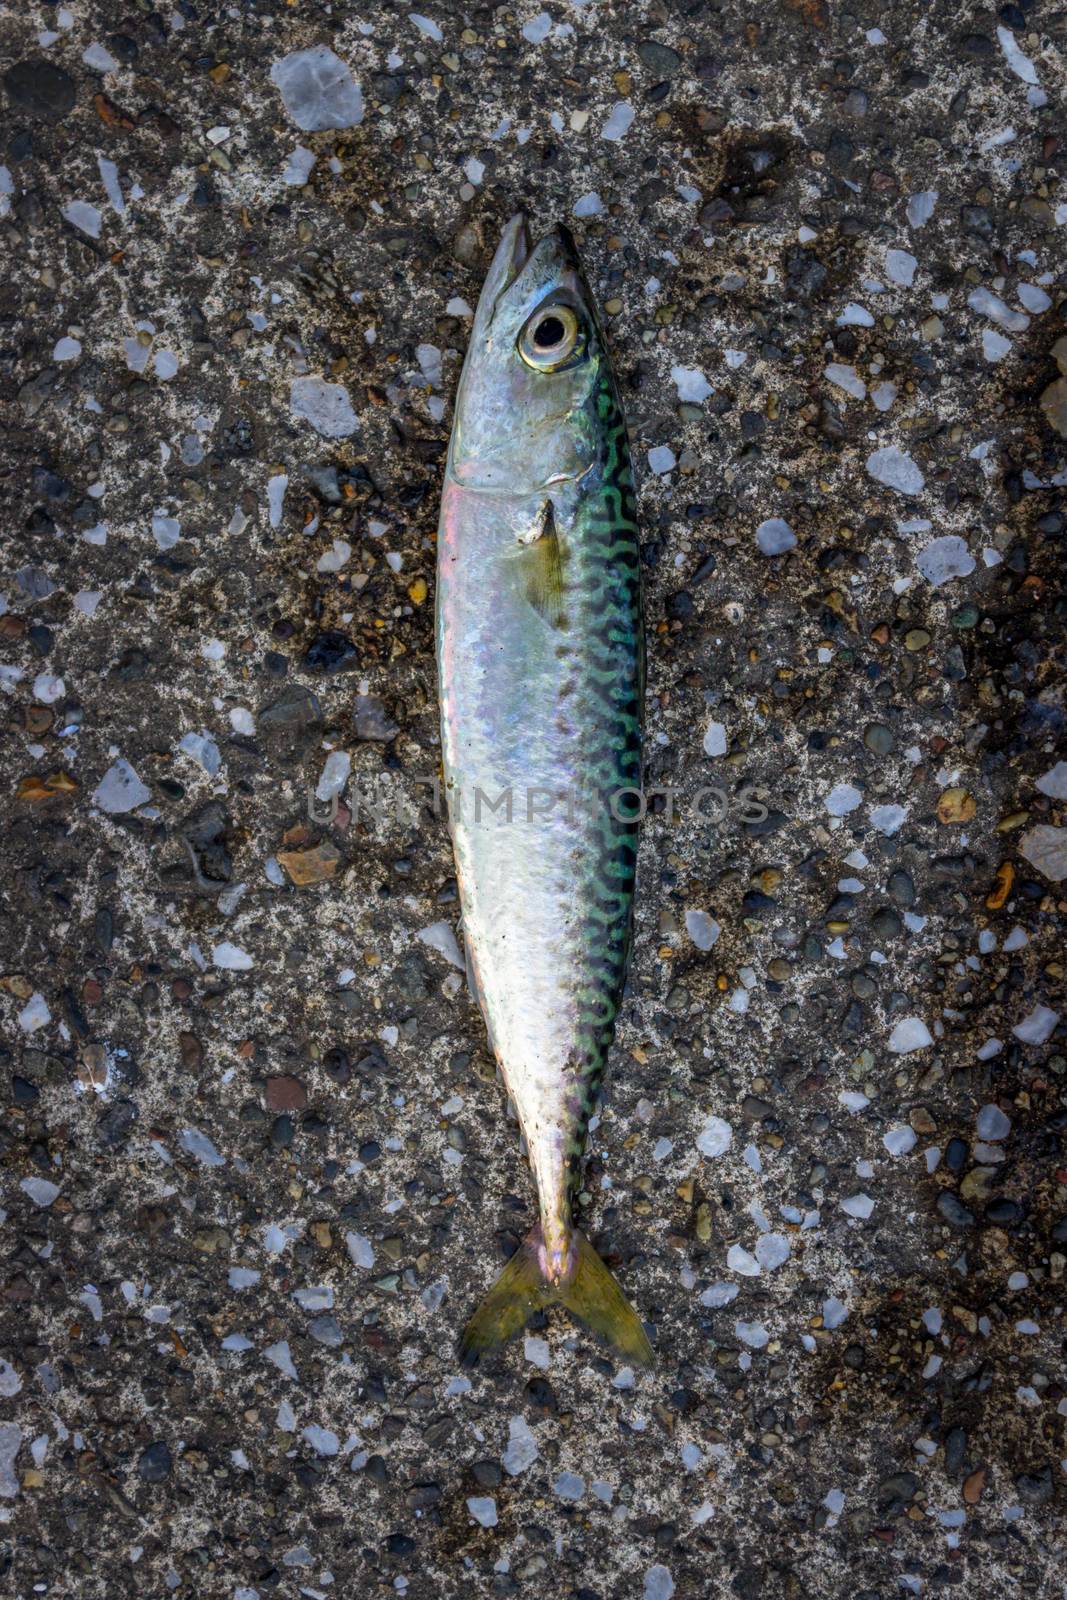 Japanese horse mackerel caught in Yokosuka City, Kanagawa, Japan. Horse mackerel is eaten baked or fried.